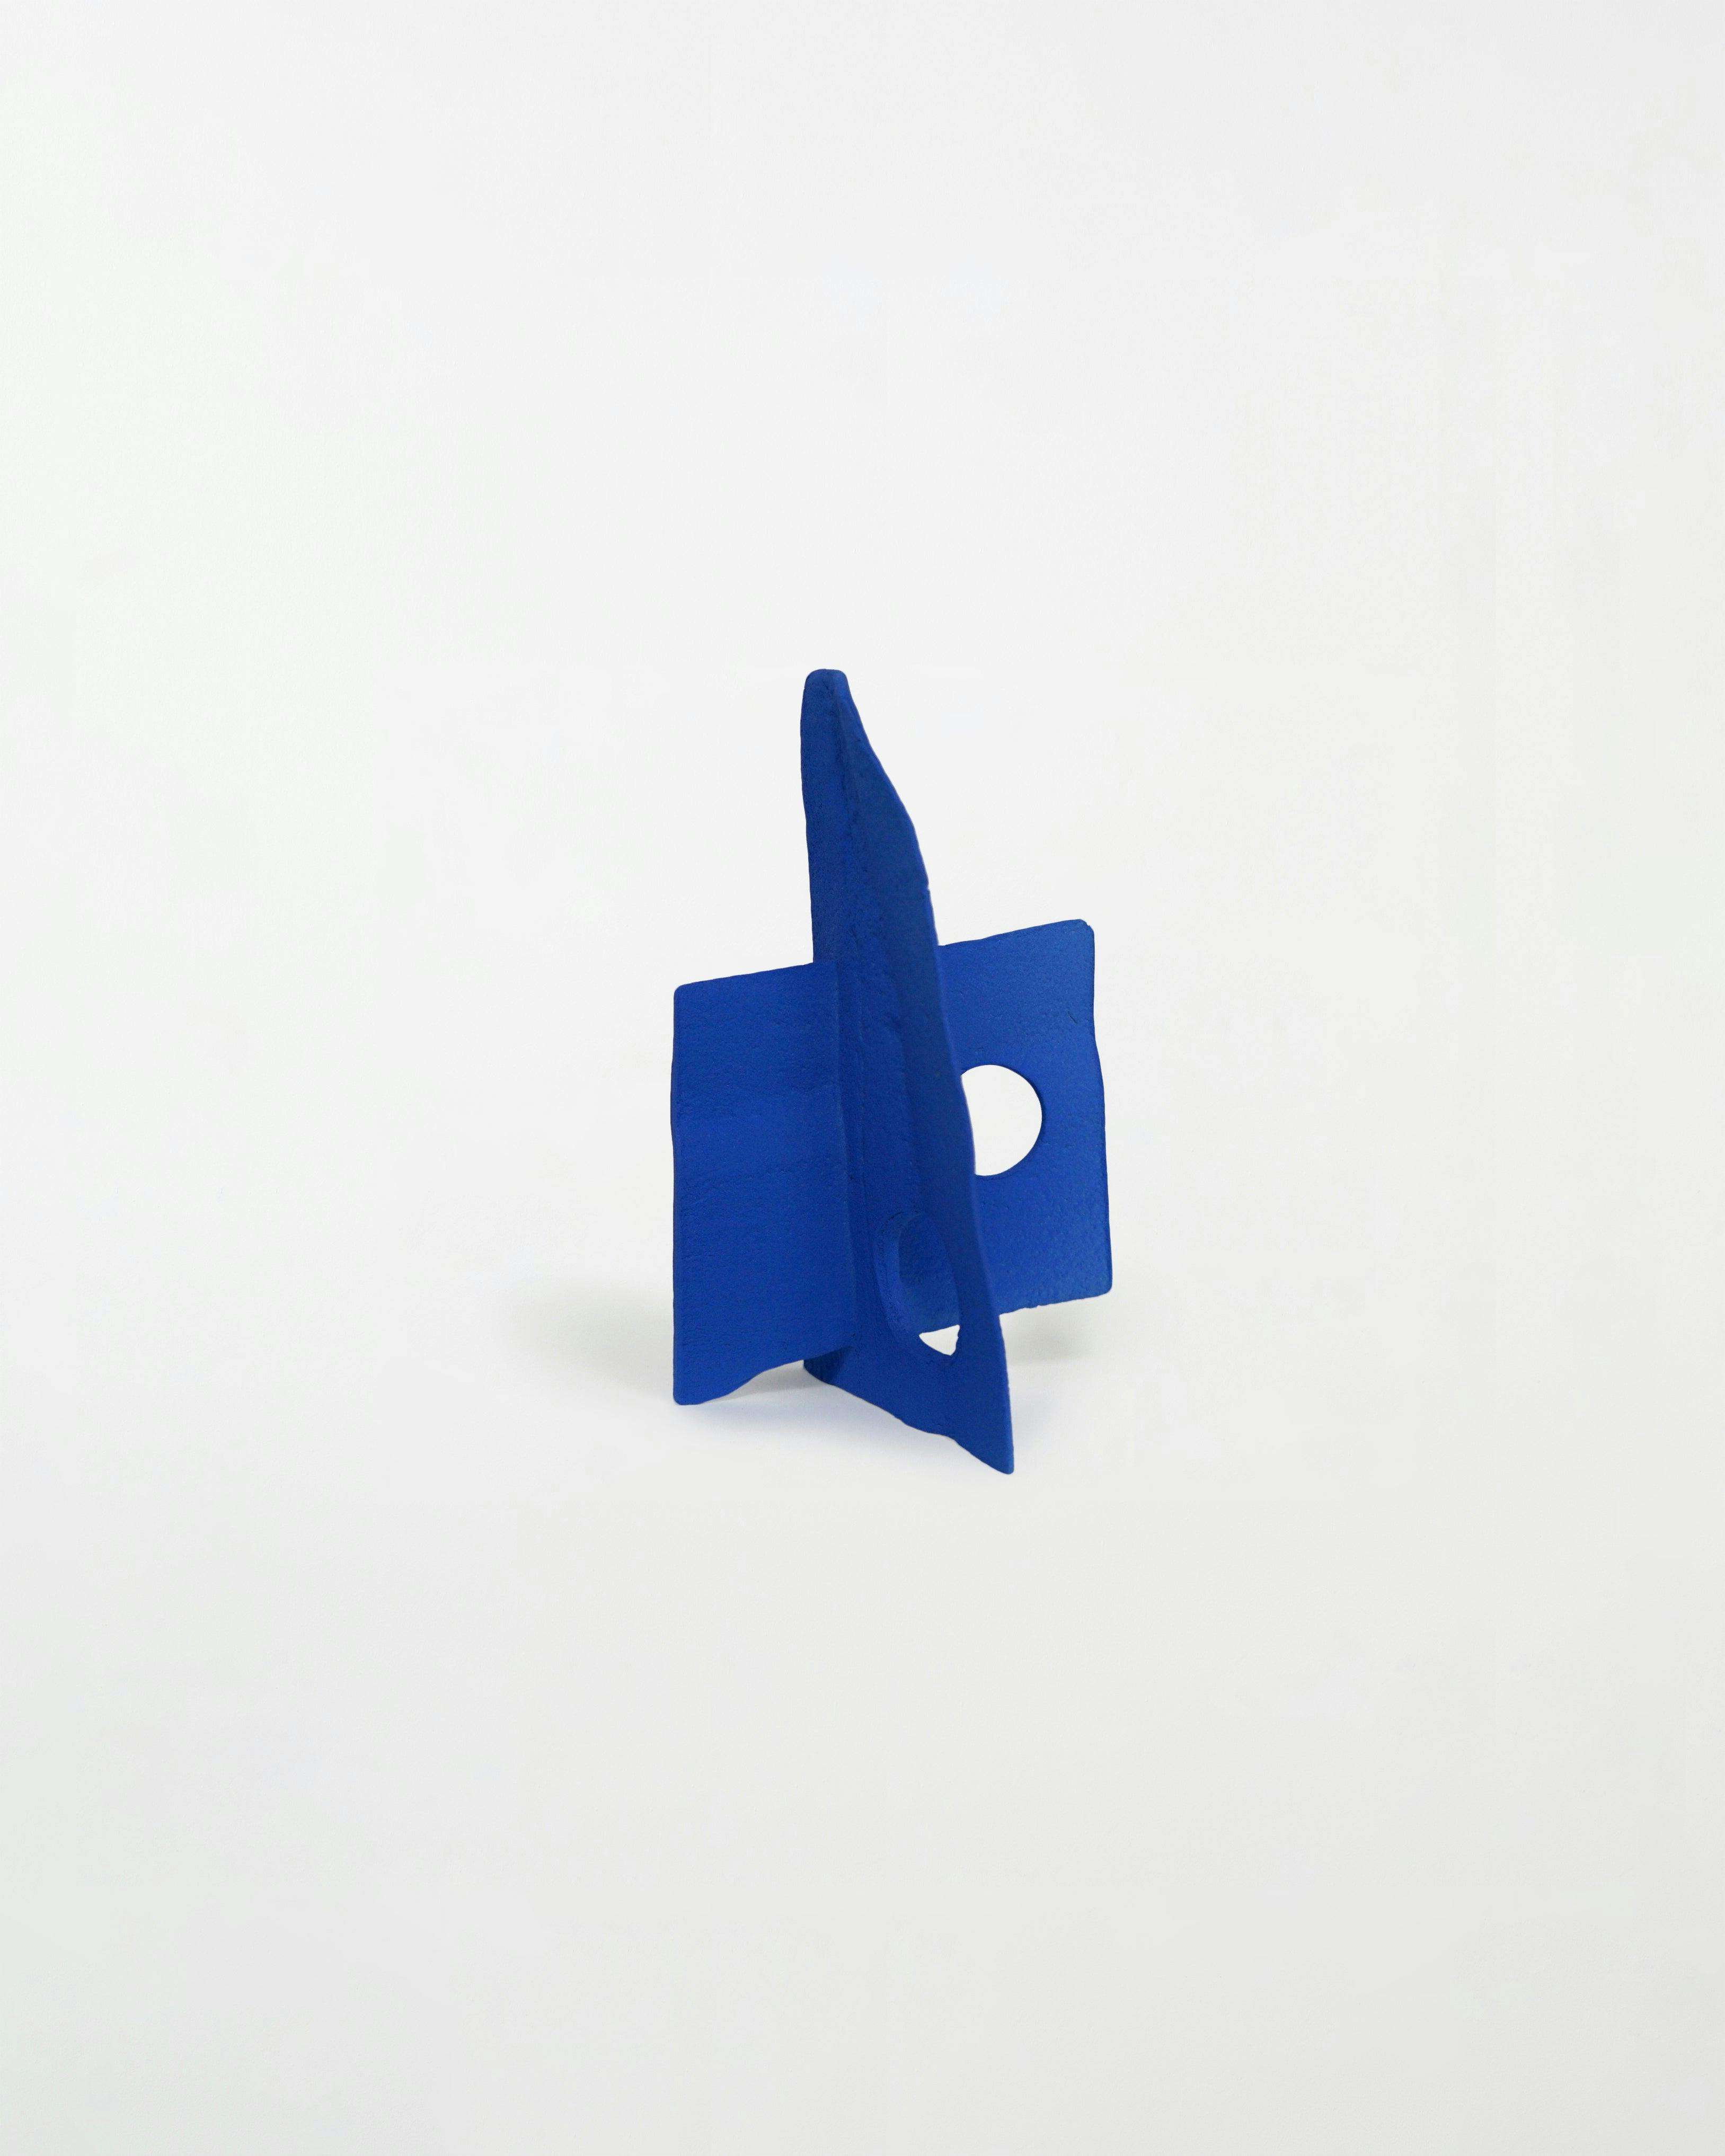 Sculpture by Fitzhugh Karol titled "Blue Lean IV".